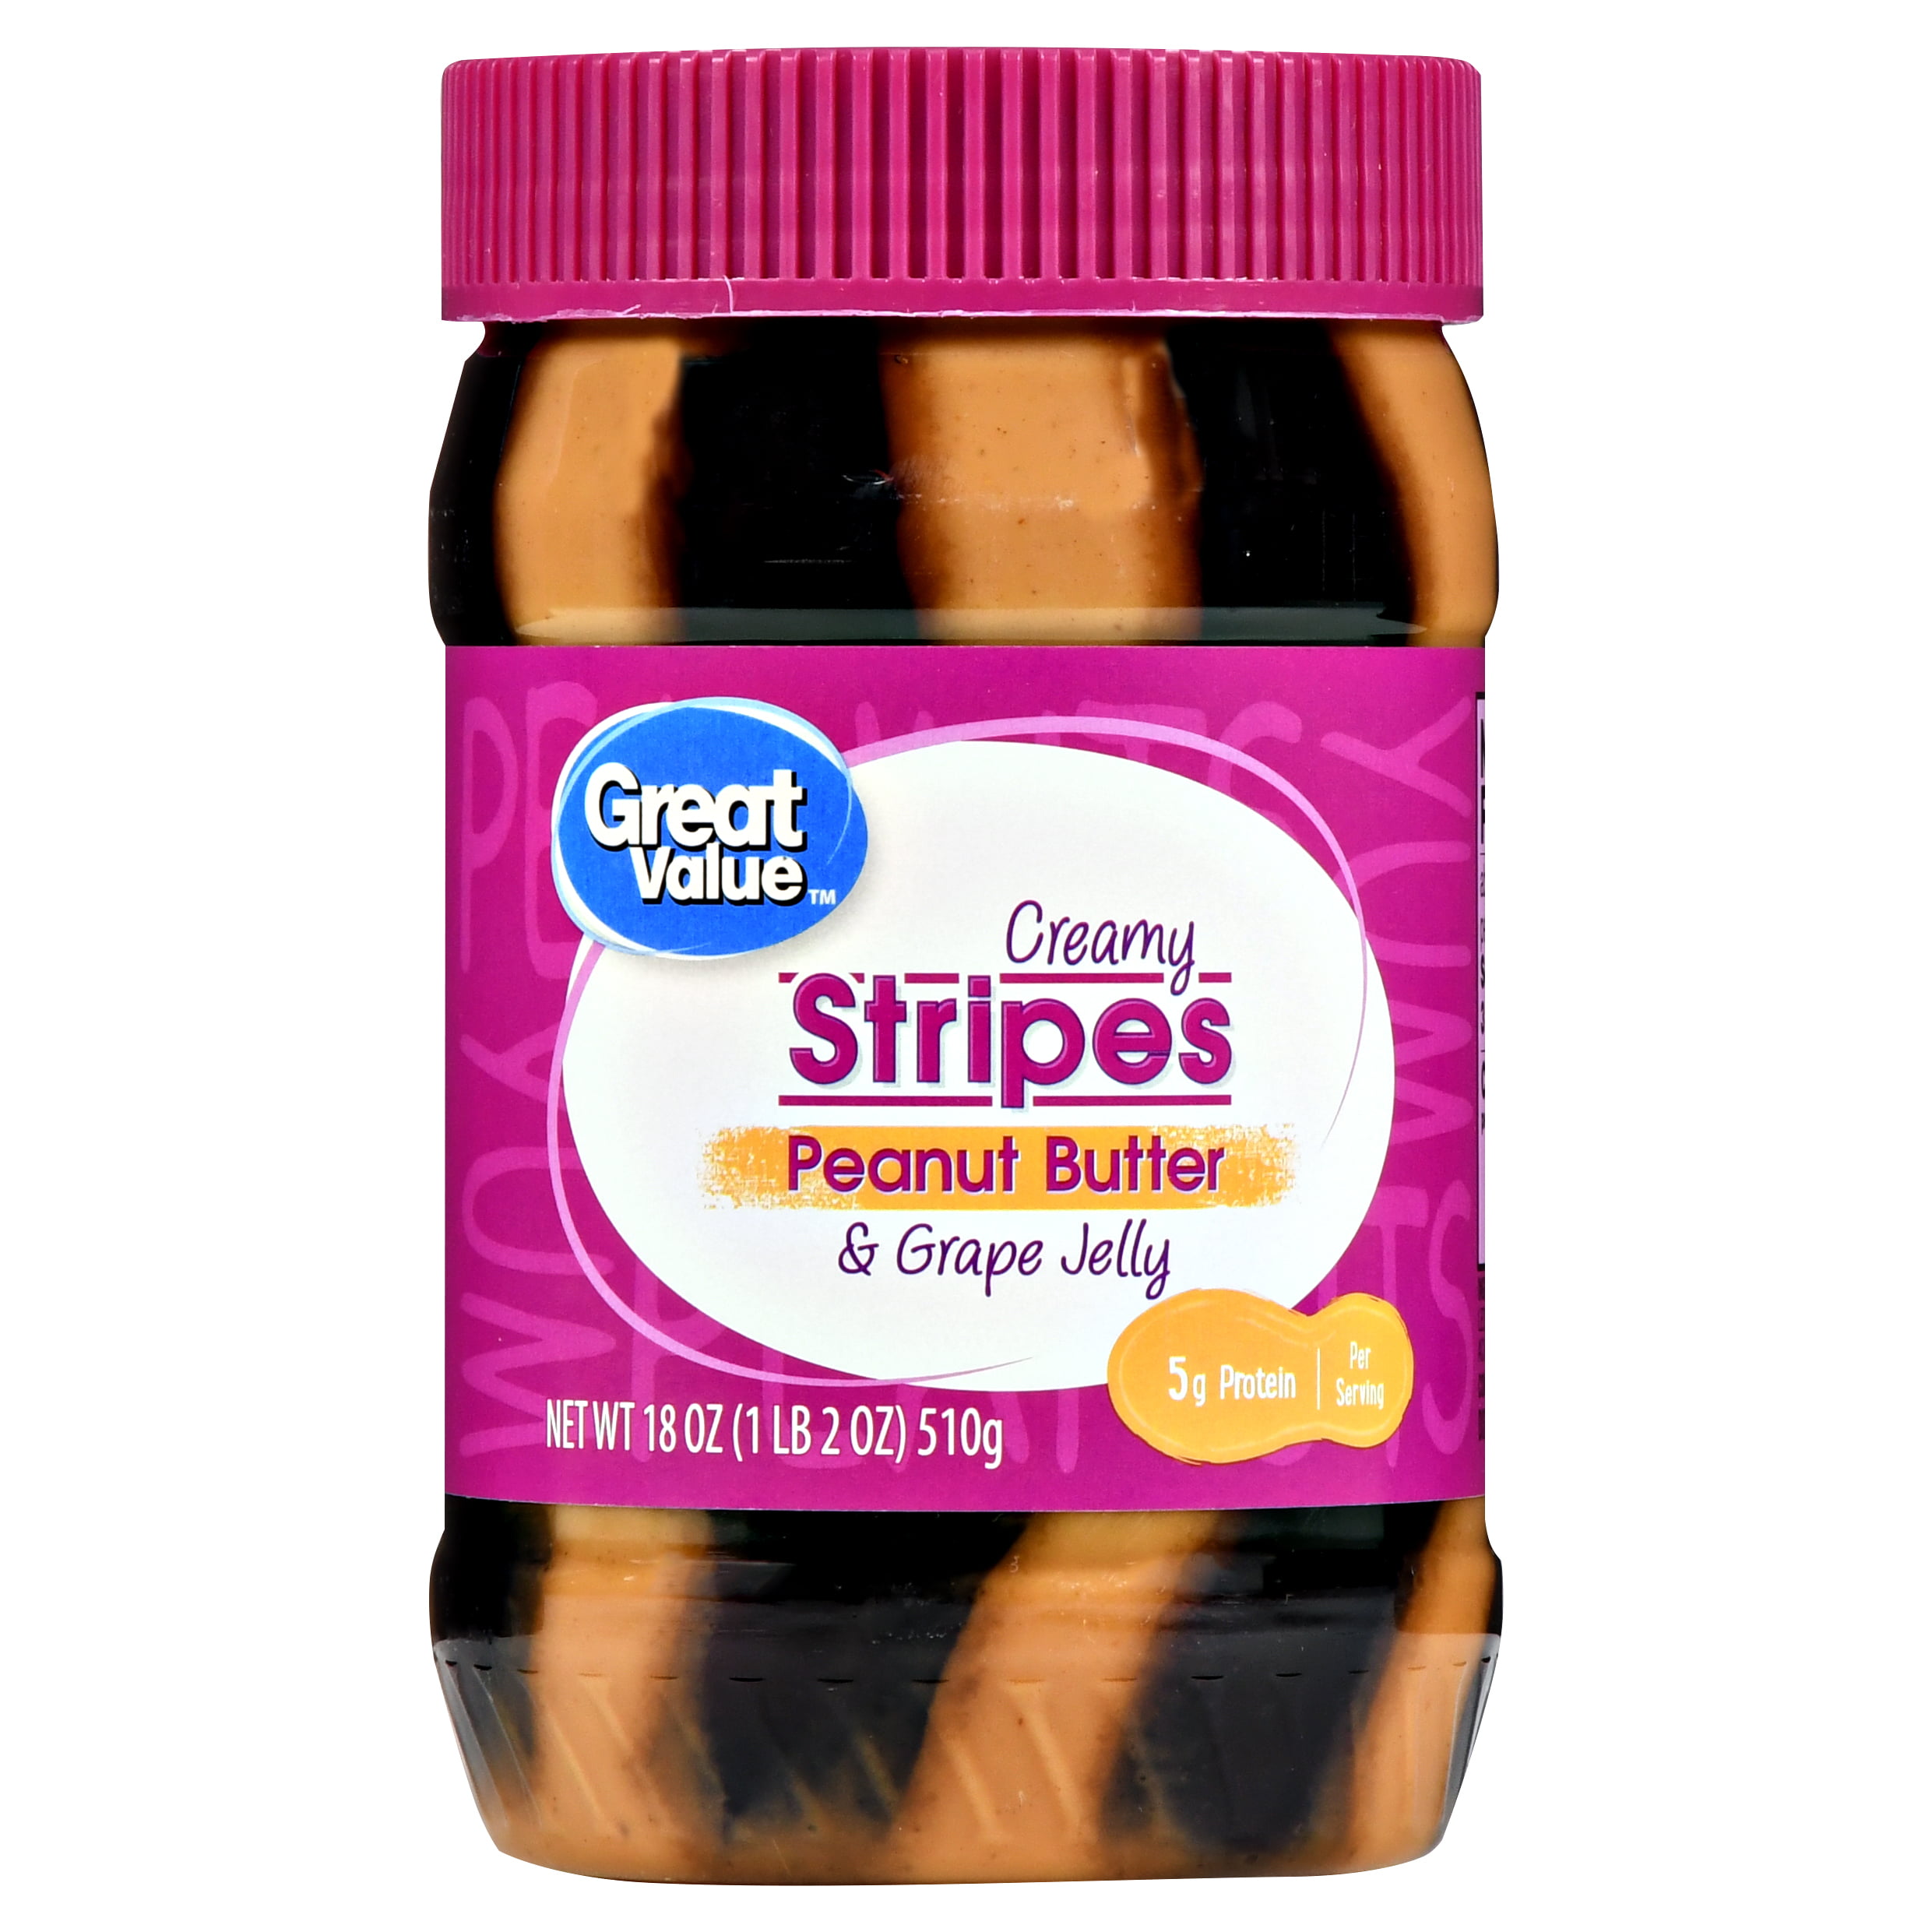 Great value паста. Great value Stripes Peanut Butter. Peanut Butter and Jelly паста. Creamy Stripes джем.